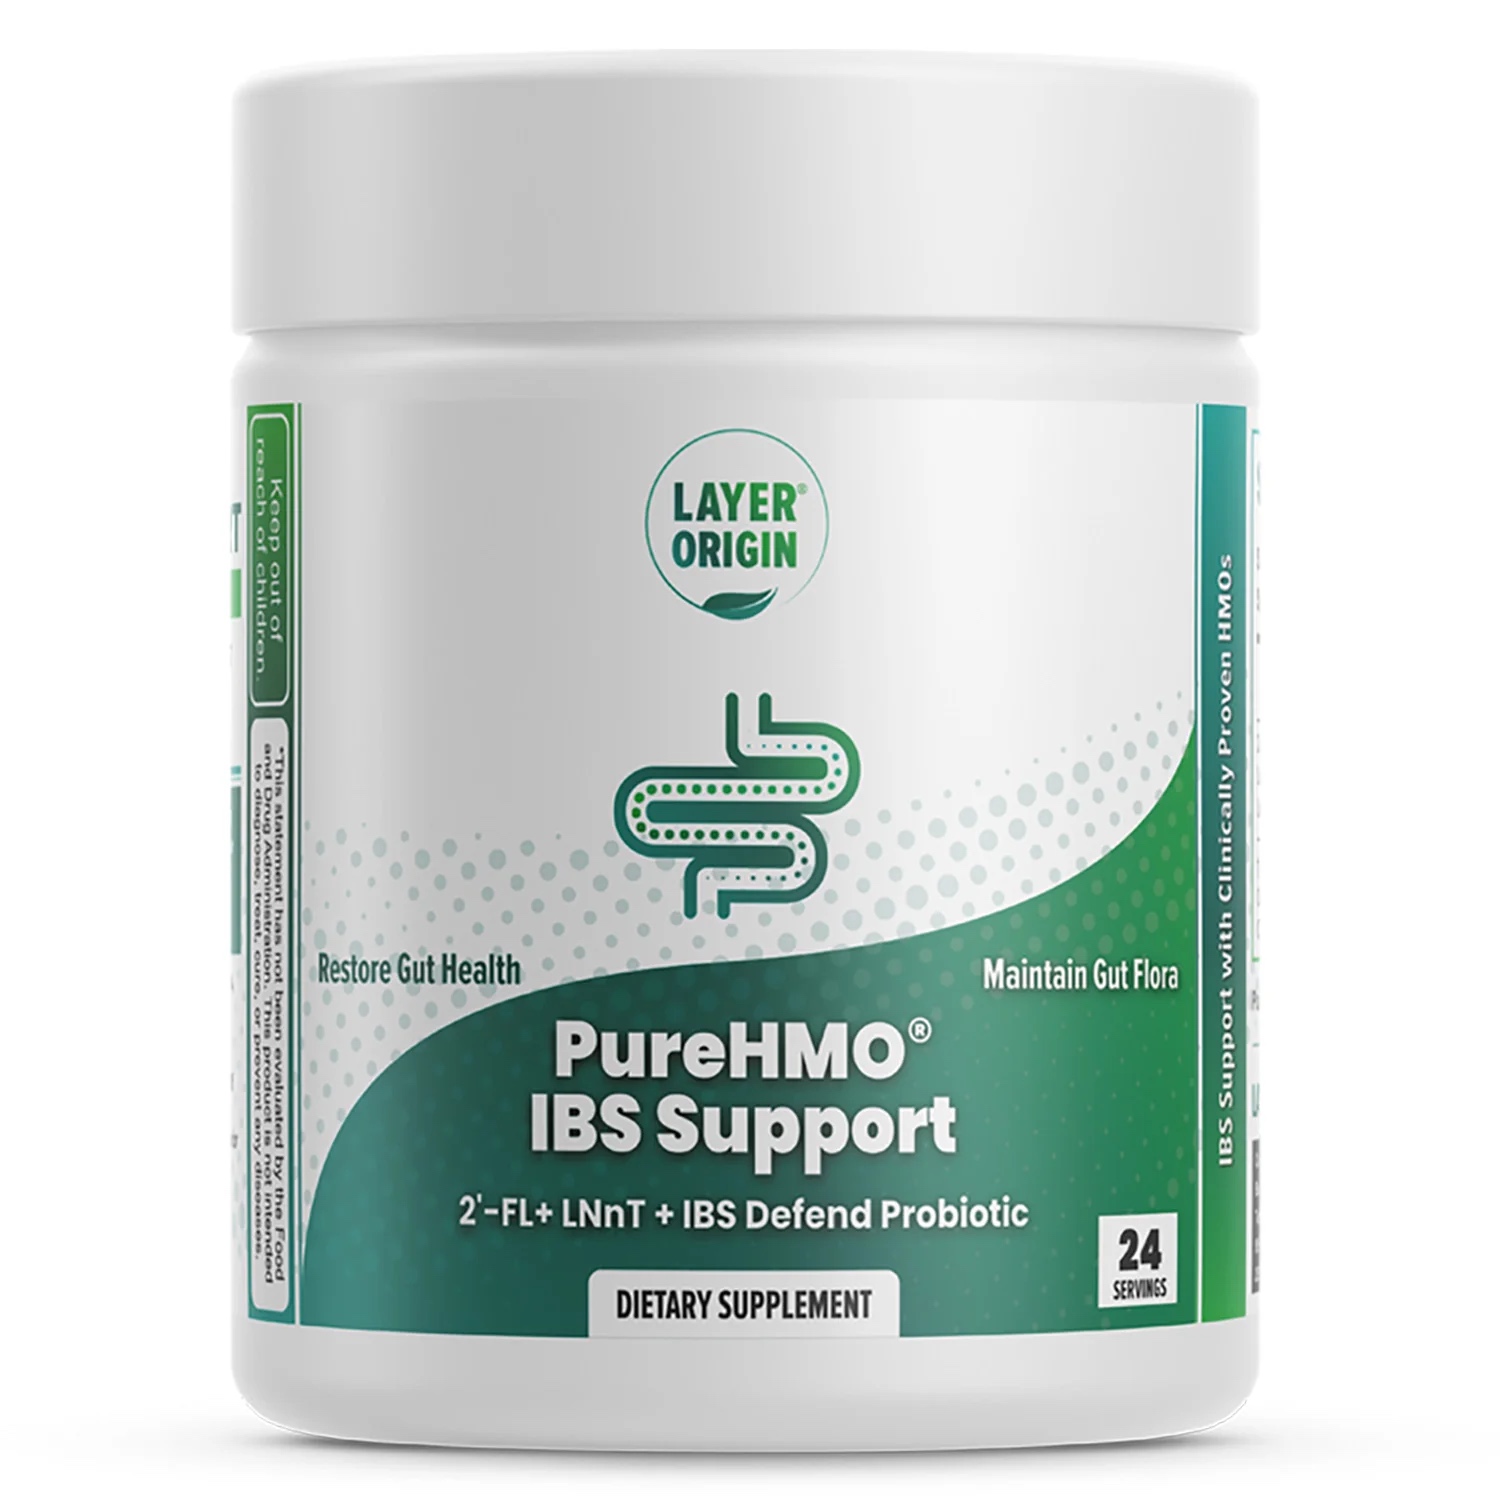 PureHMO IBS Support<br />
HMO prášek s probiotikem